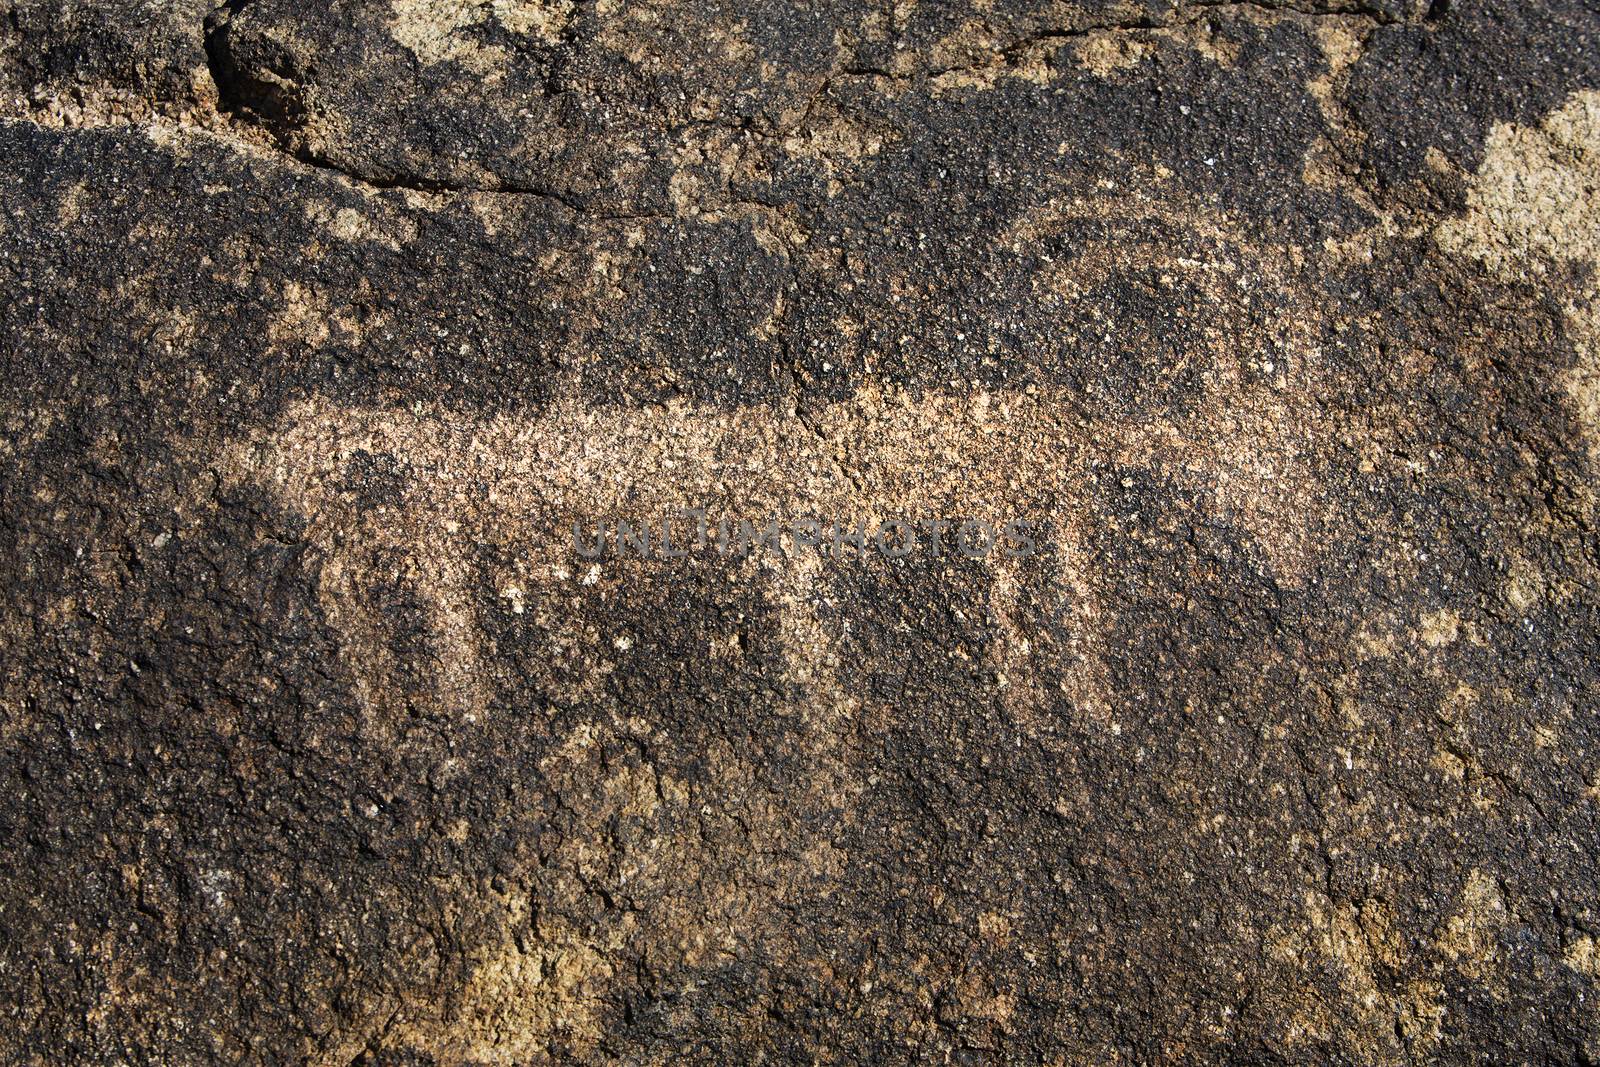 Native American Petroglyph of Animal in canyon near Chloride Arizona